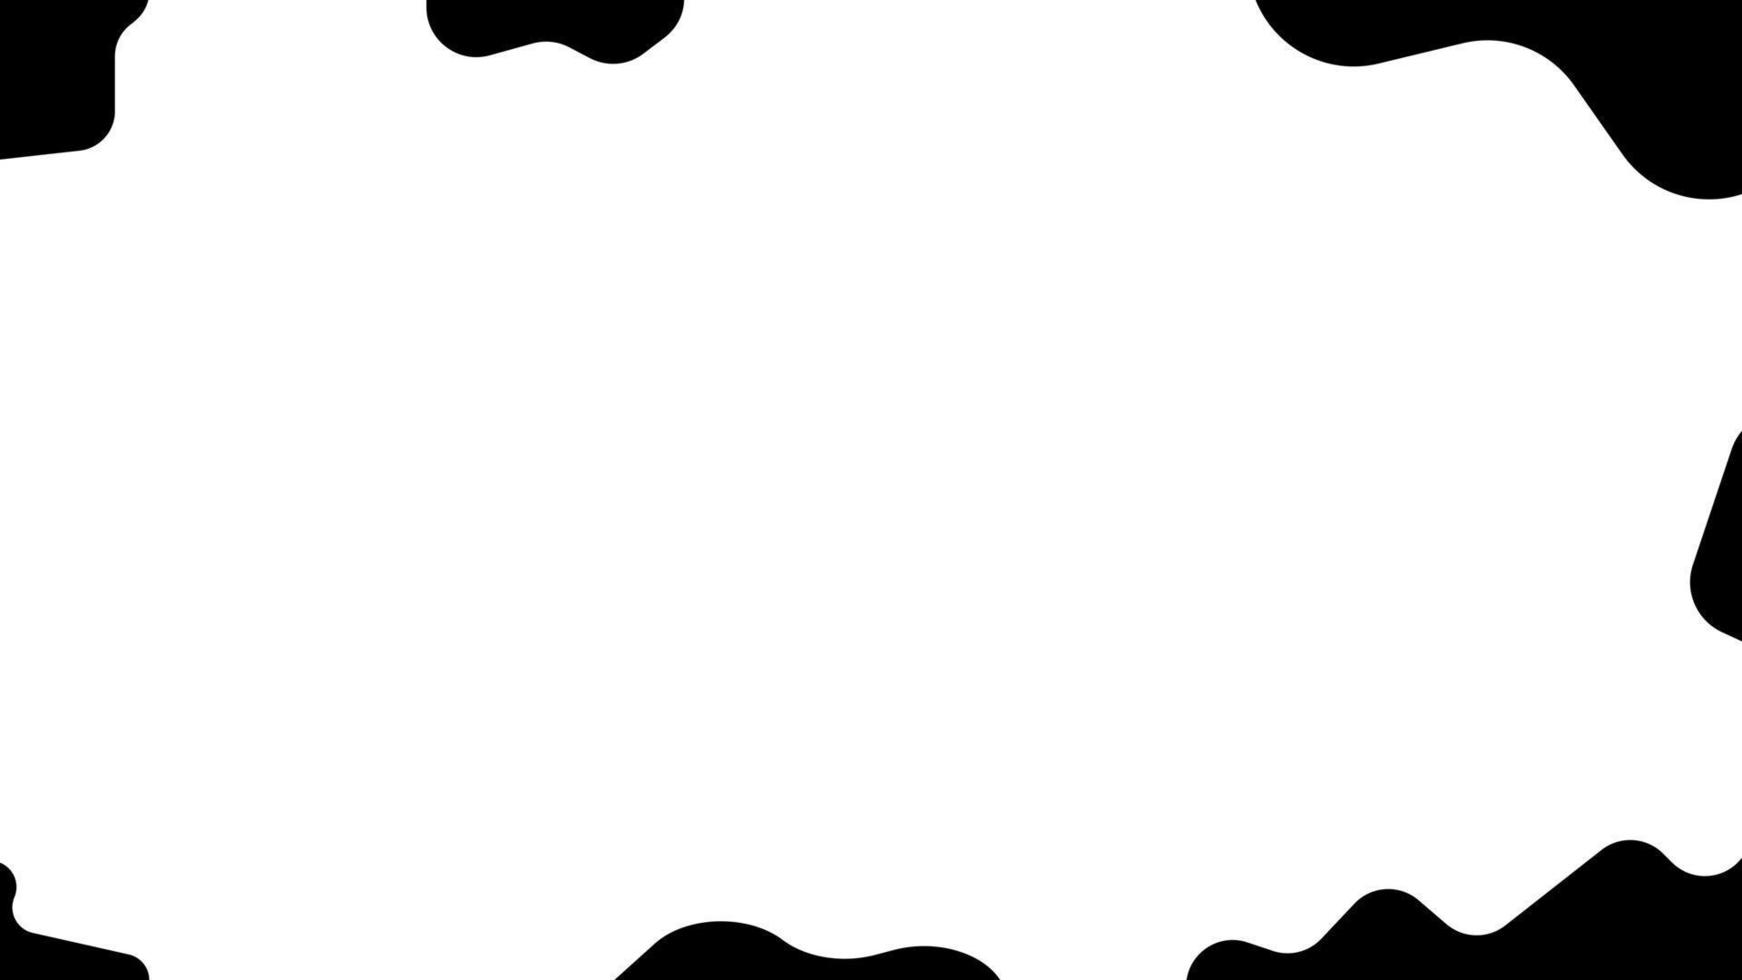 bonito vaca preto e branco abstrato, perfeito para papel de parede, pano de fundo, cartão postal, plano de fundo vetor